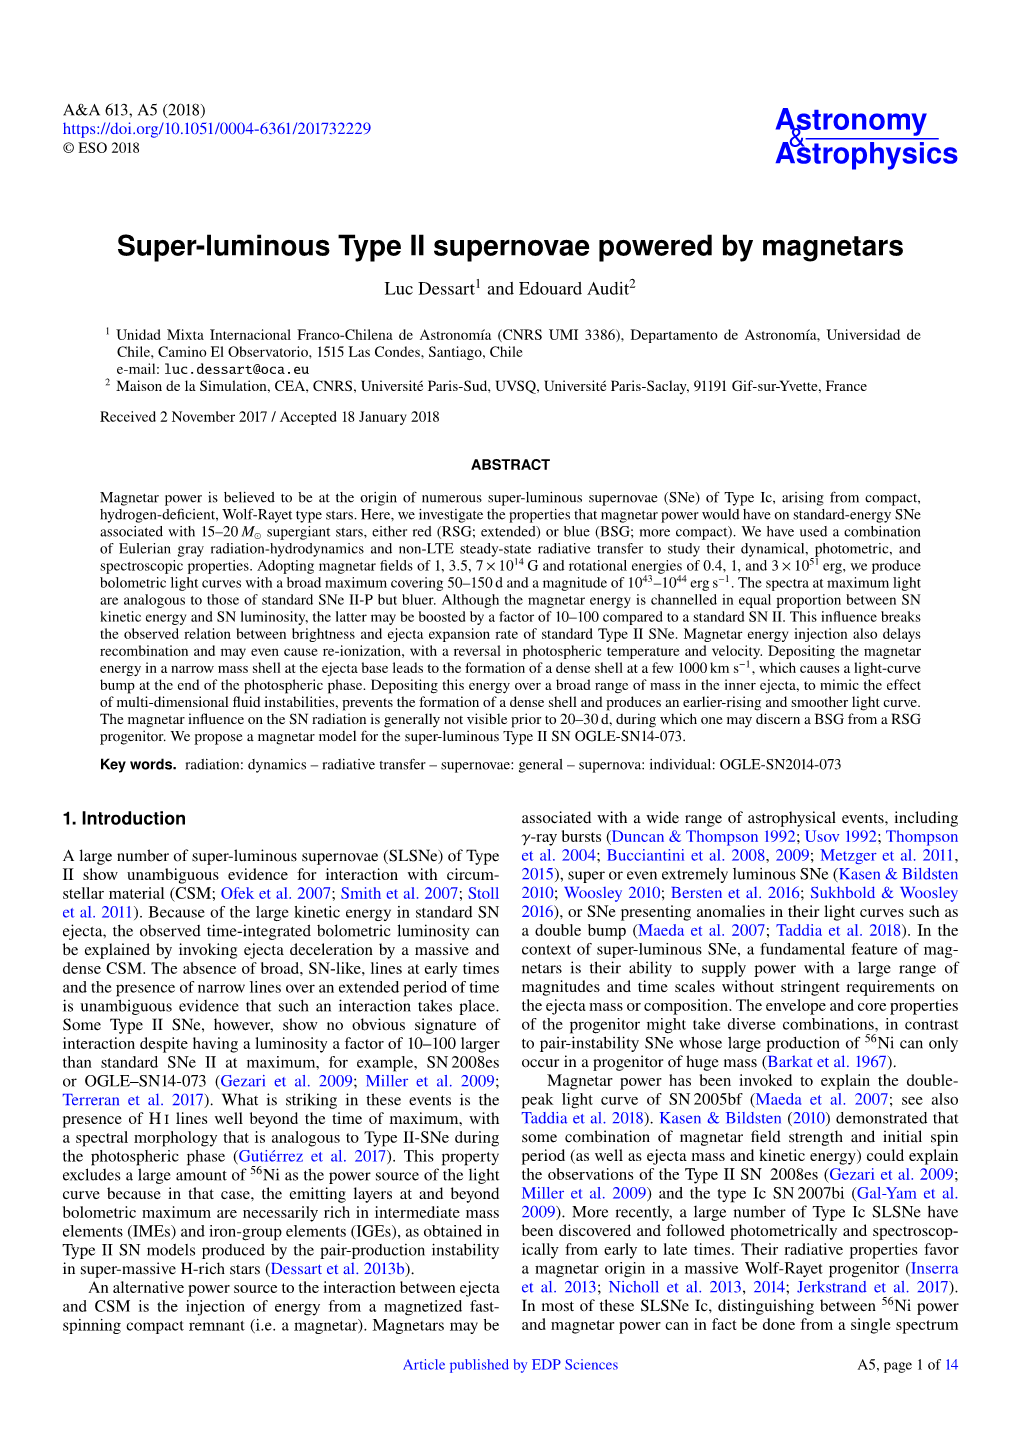 Super-Luminous Type II Supernovae Powered by Magnetars Luc Dessart1 and Edouard Audit2